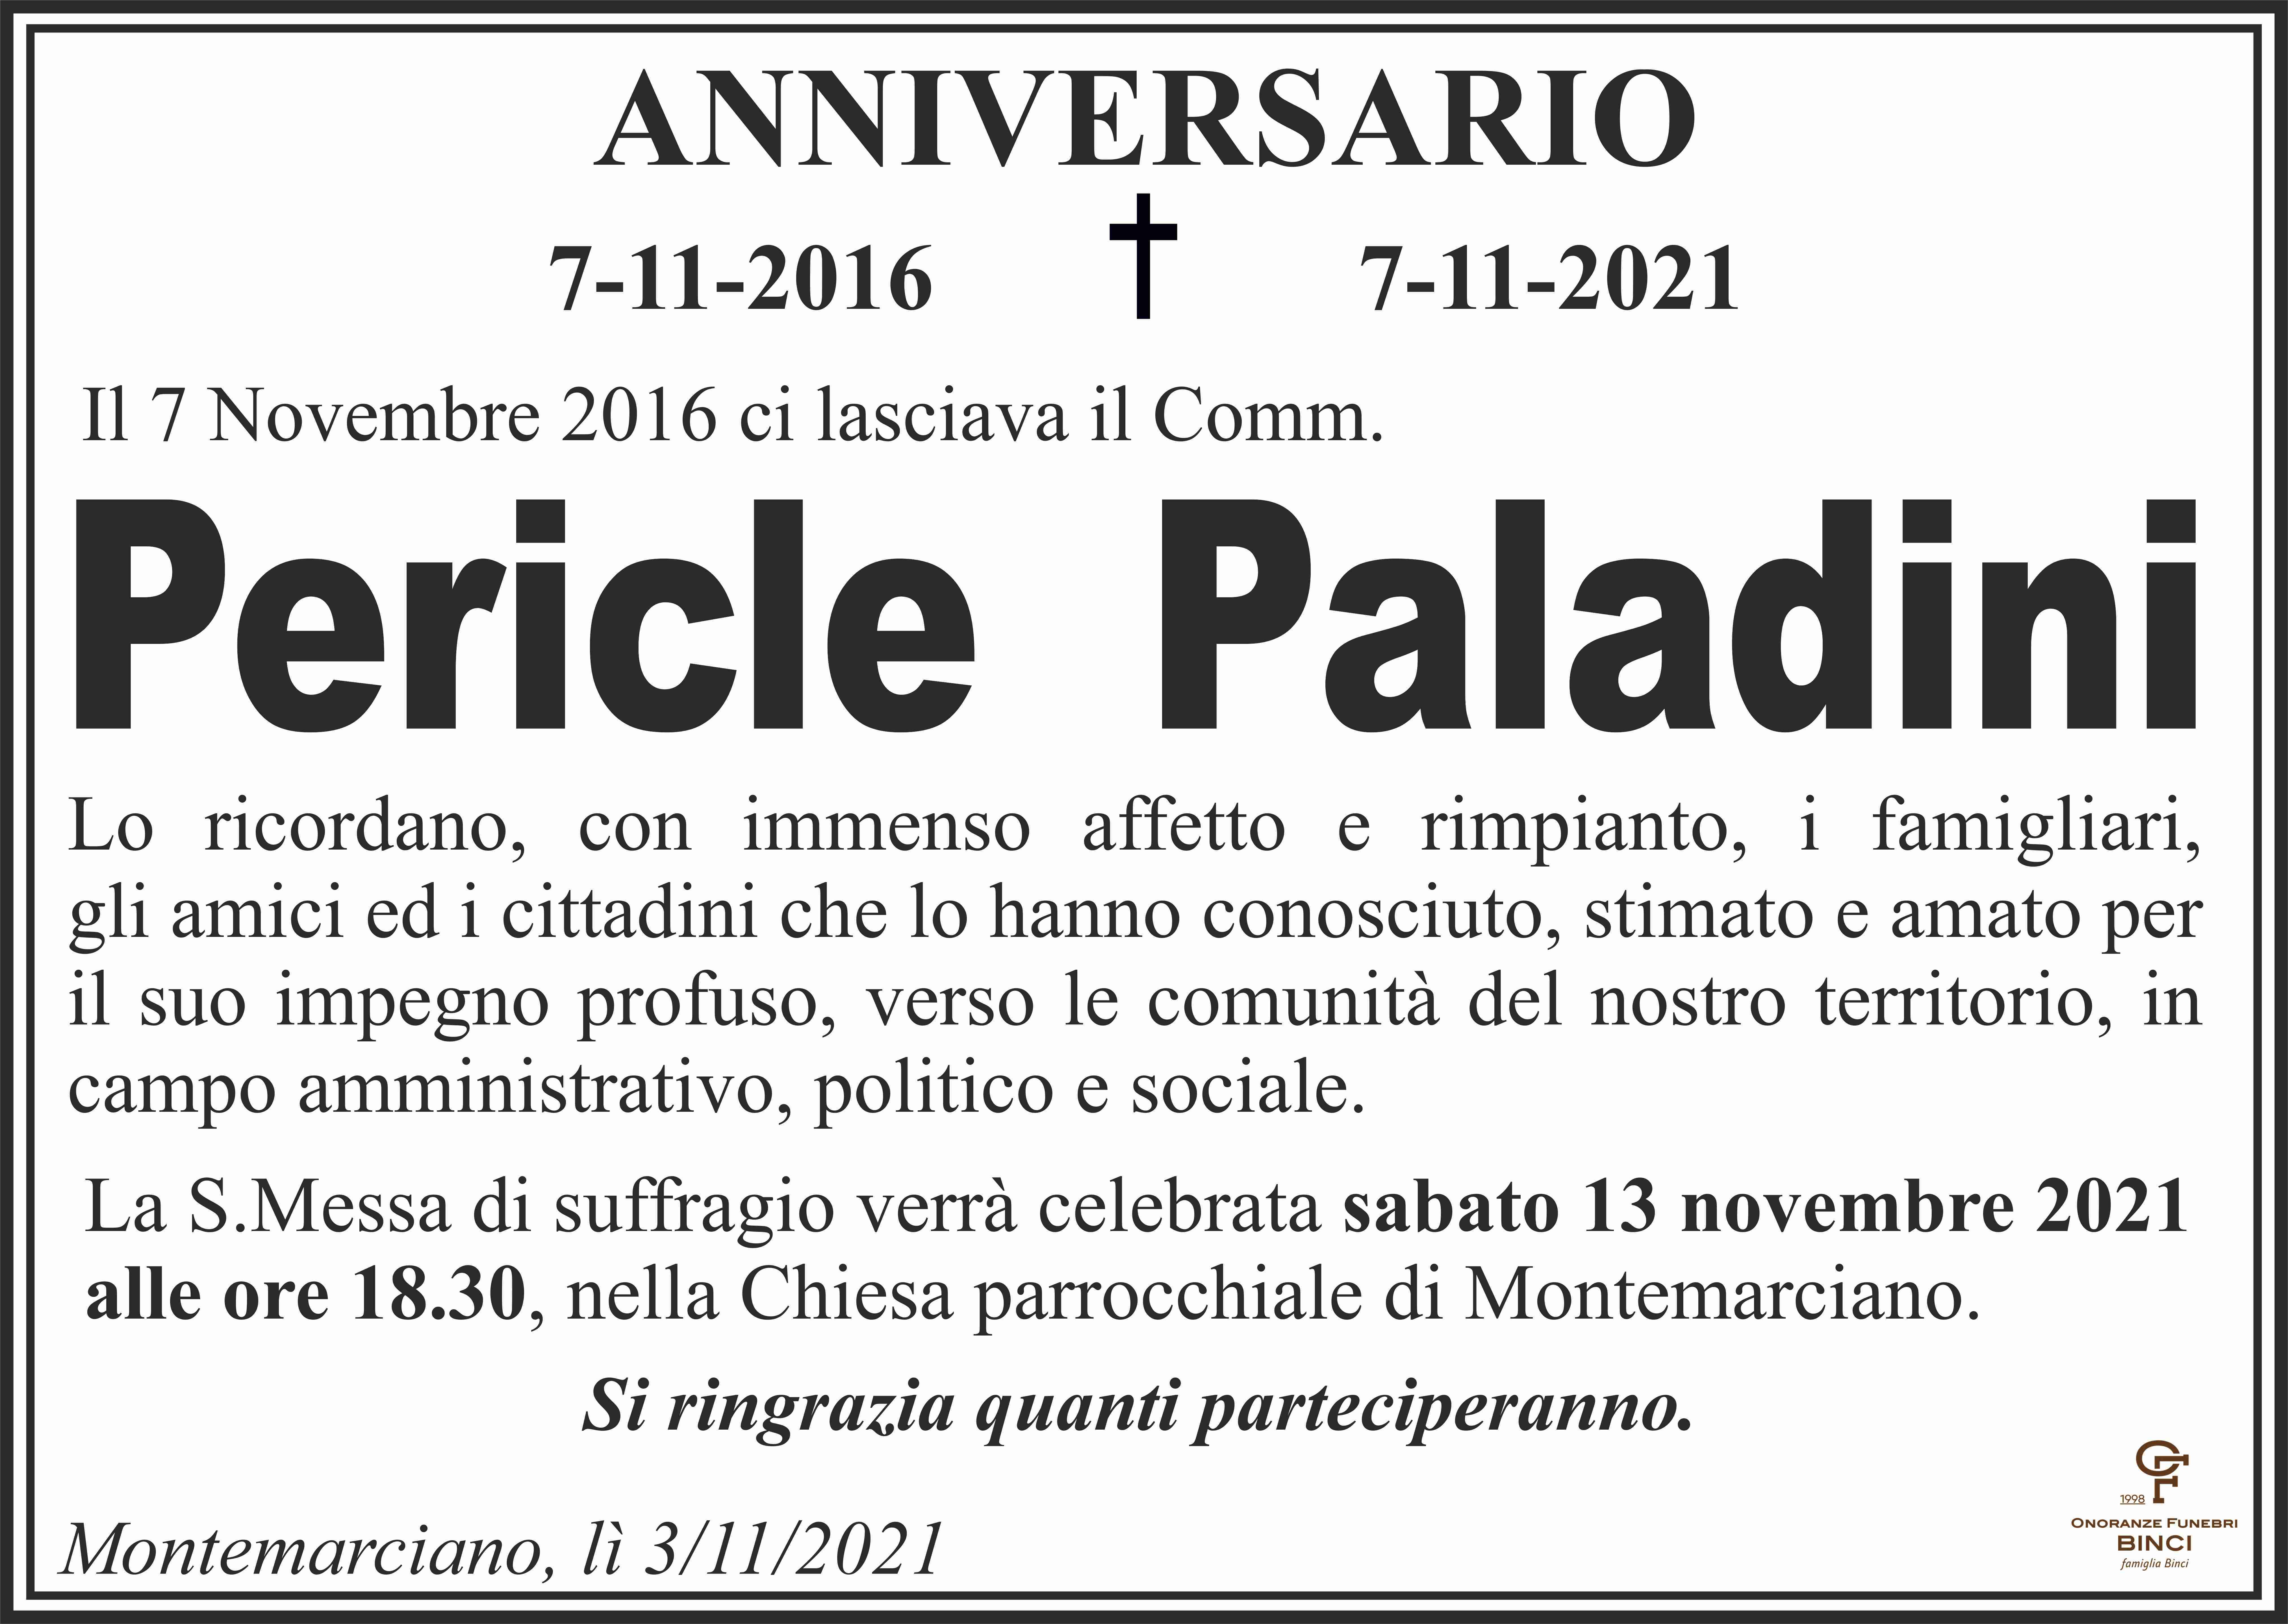 Pericle Paladini